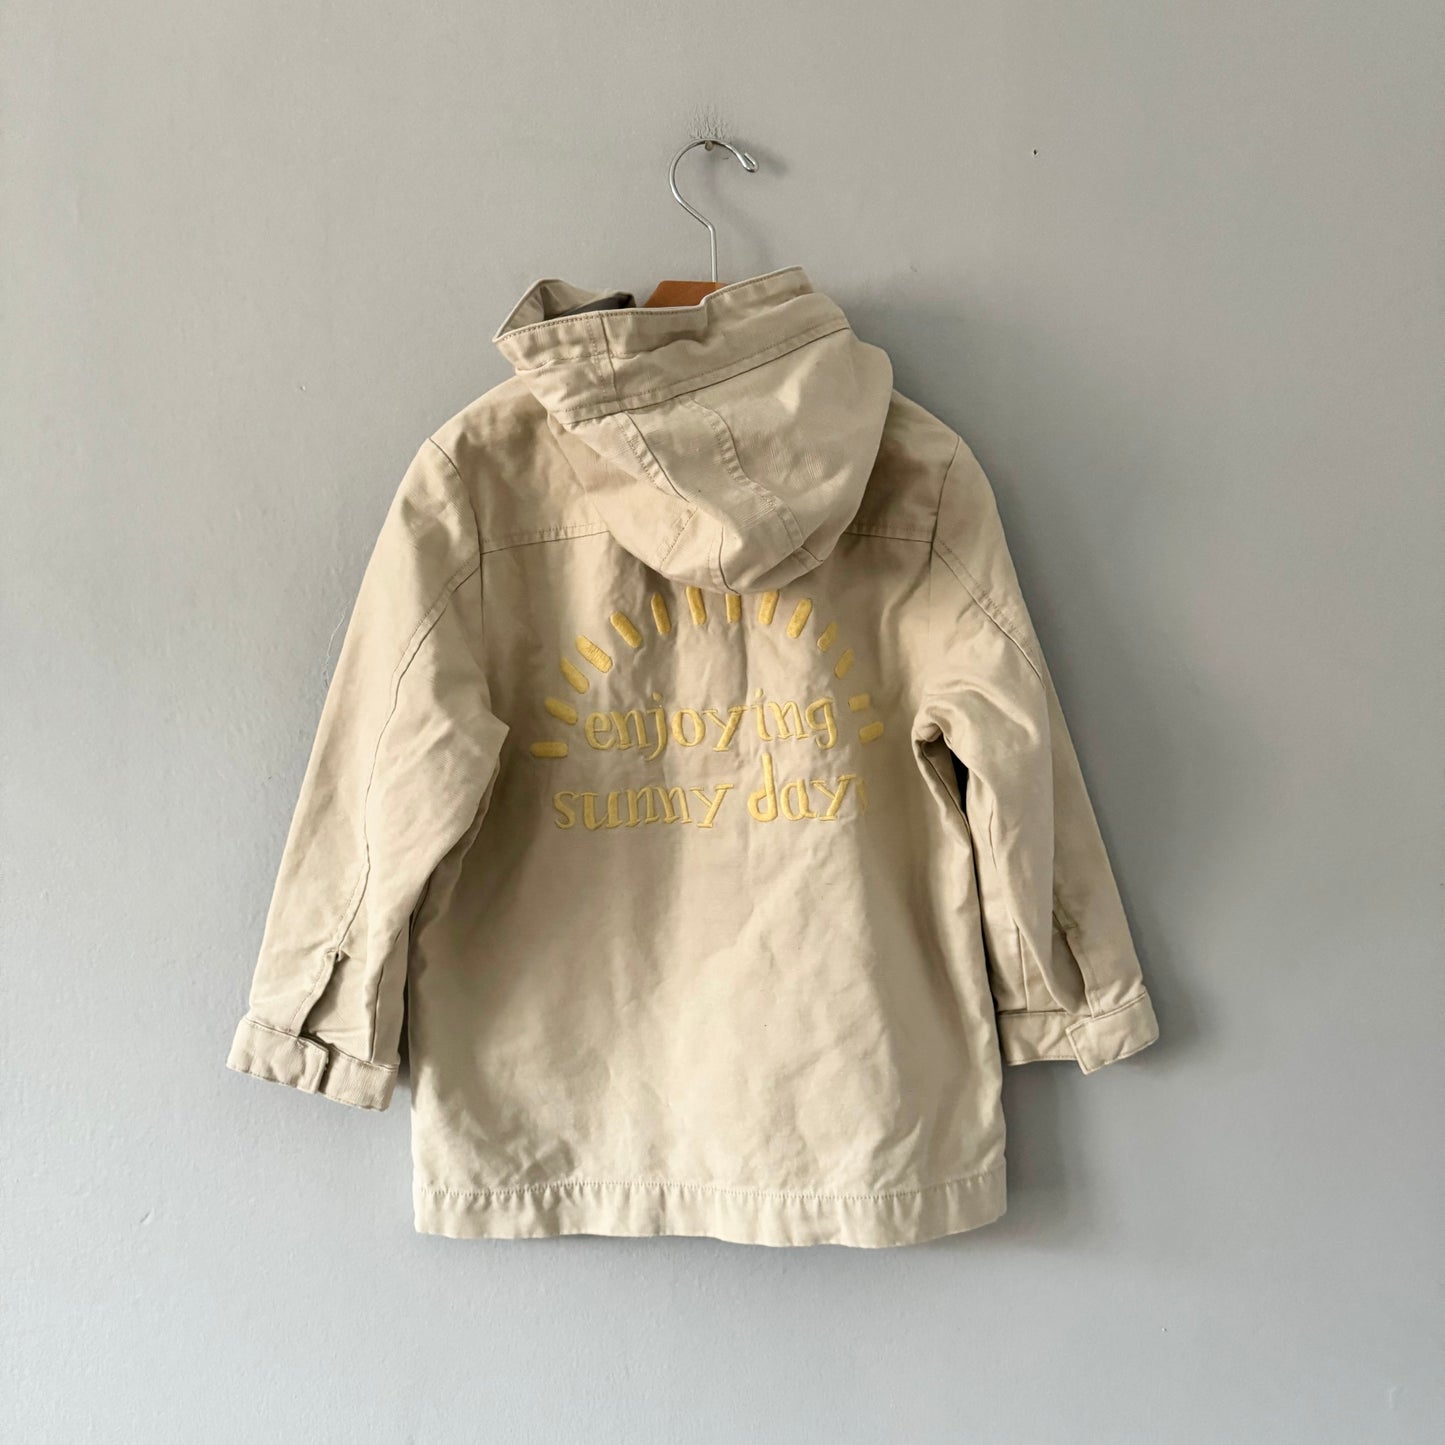 Zara / Beige cotton jacket / 4-5Y - New with tag